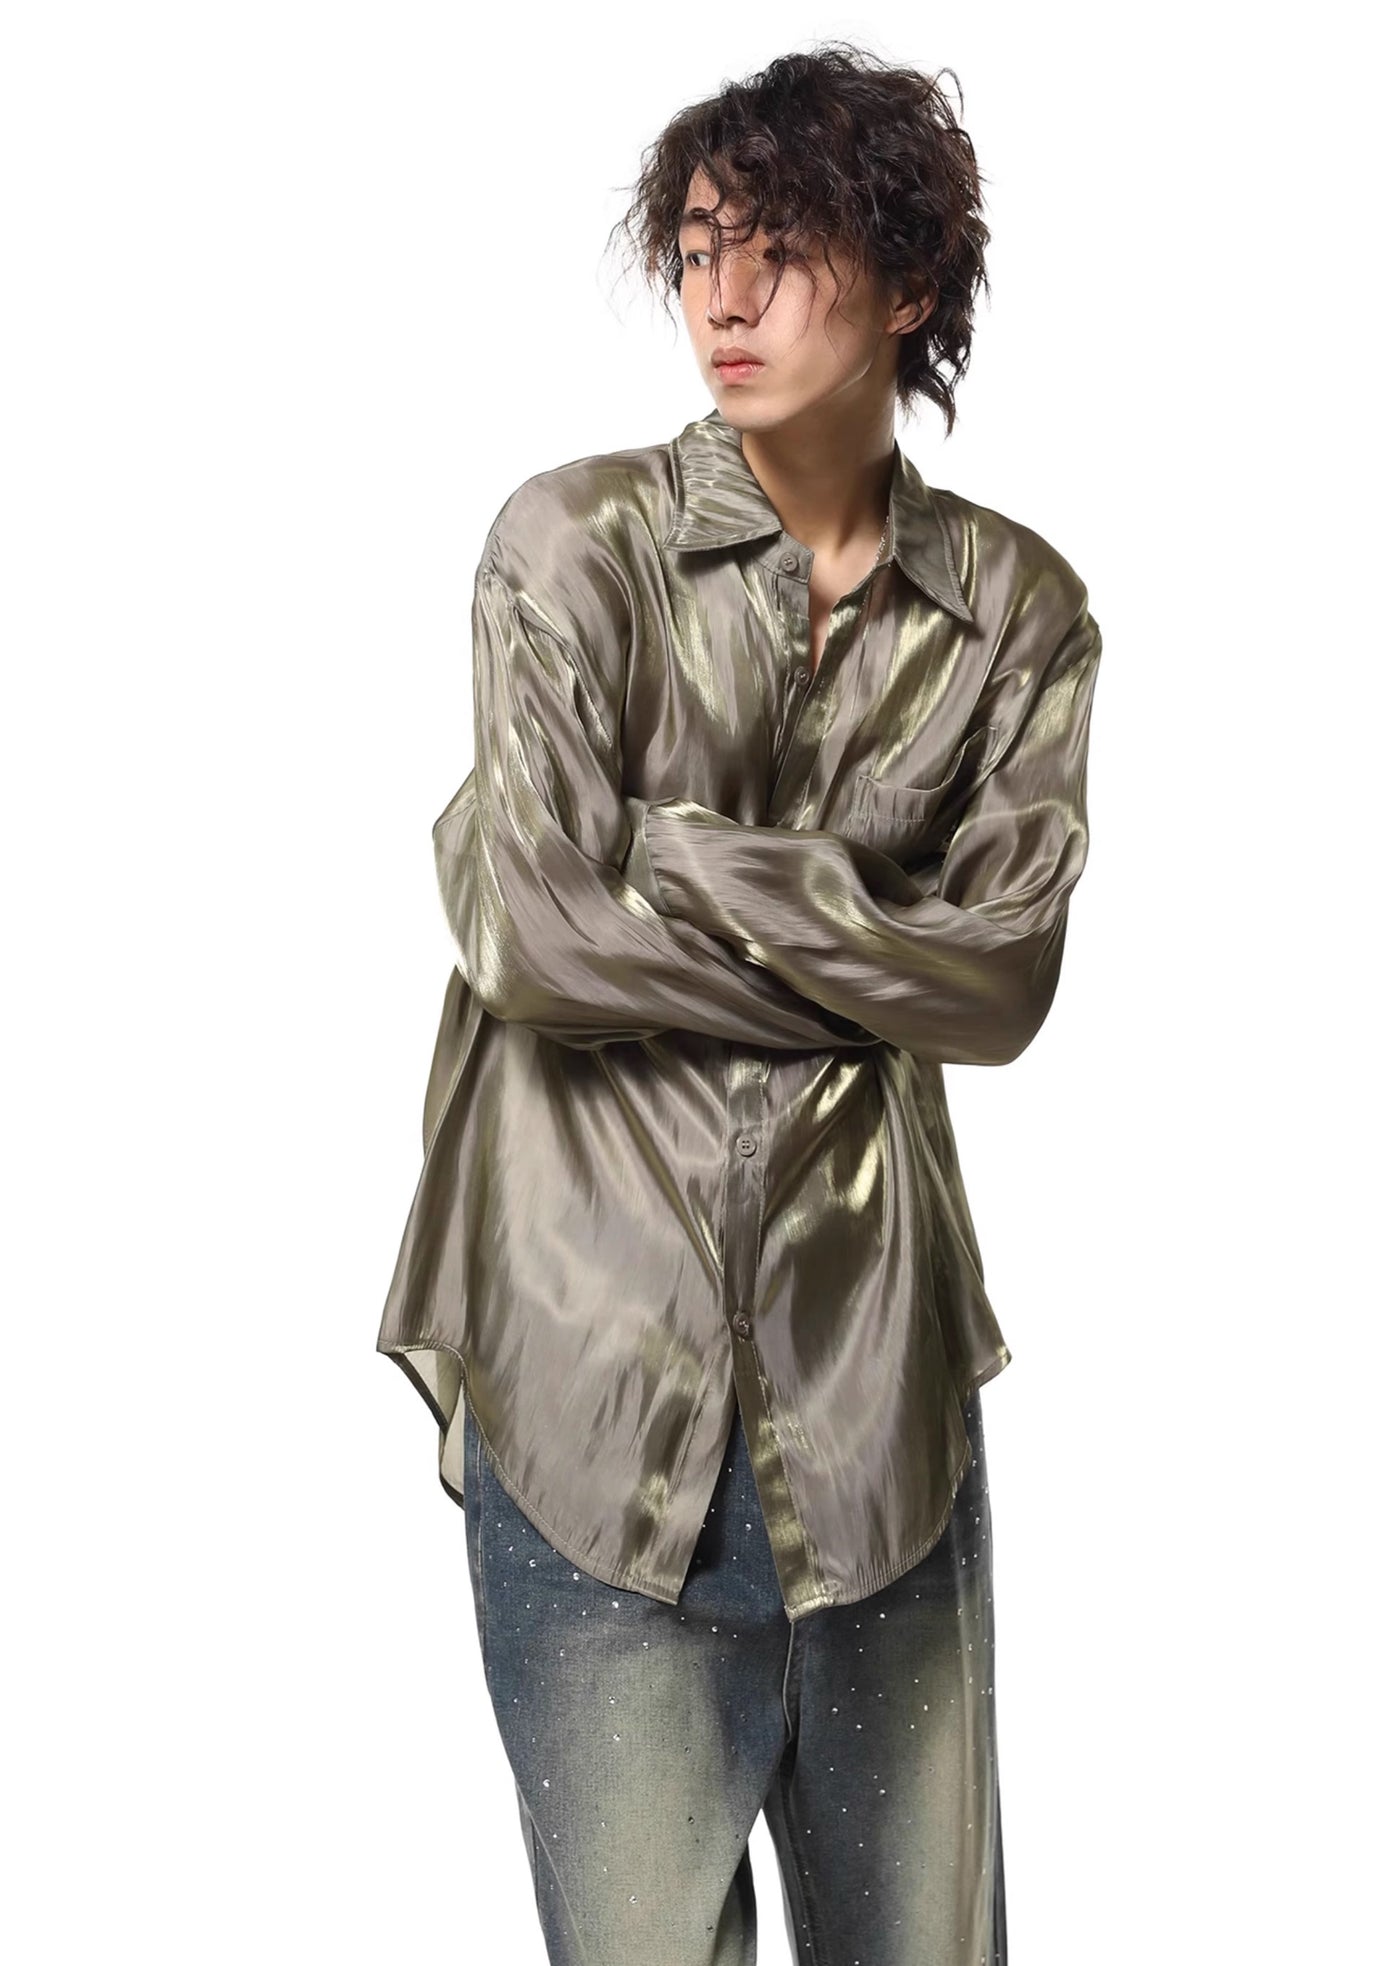 【Future Boy】Glossy design loose silhouette mind long sleeve shirt  FB0005